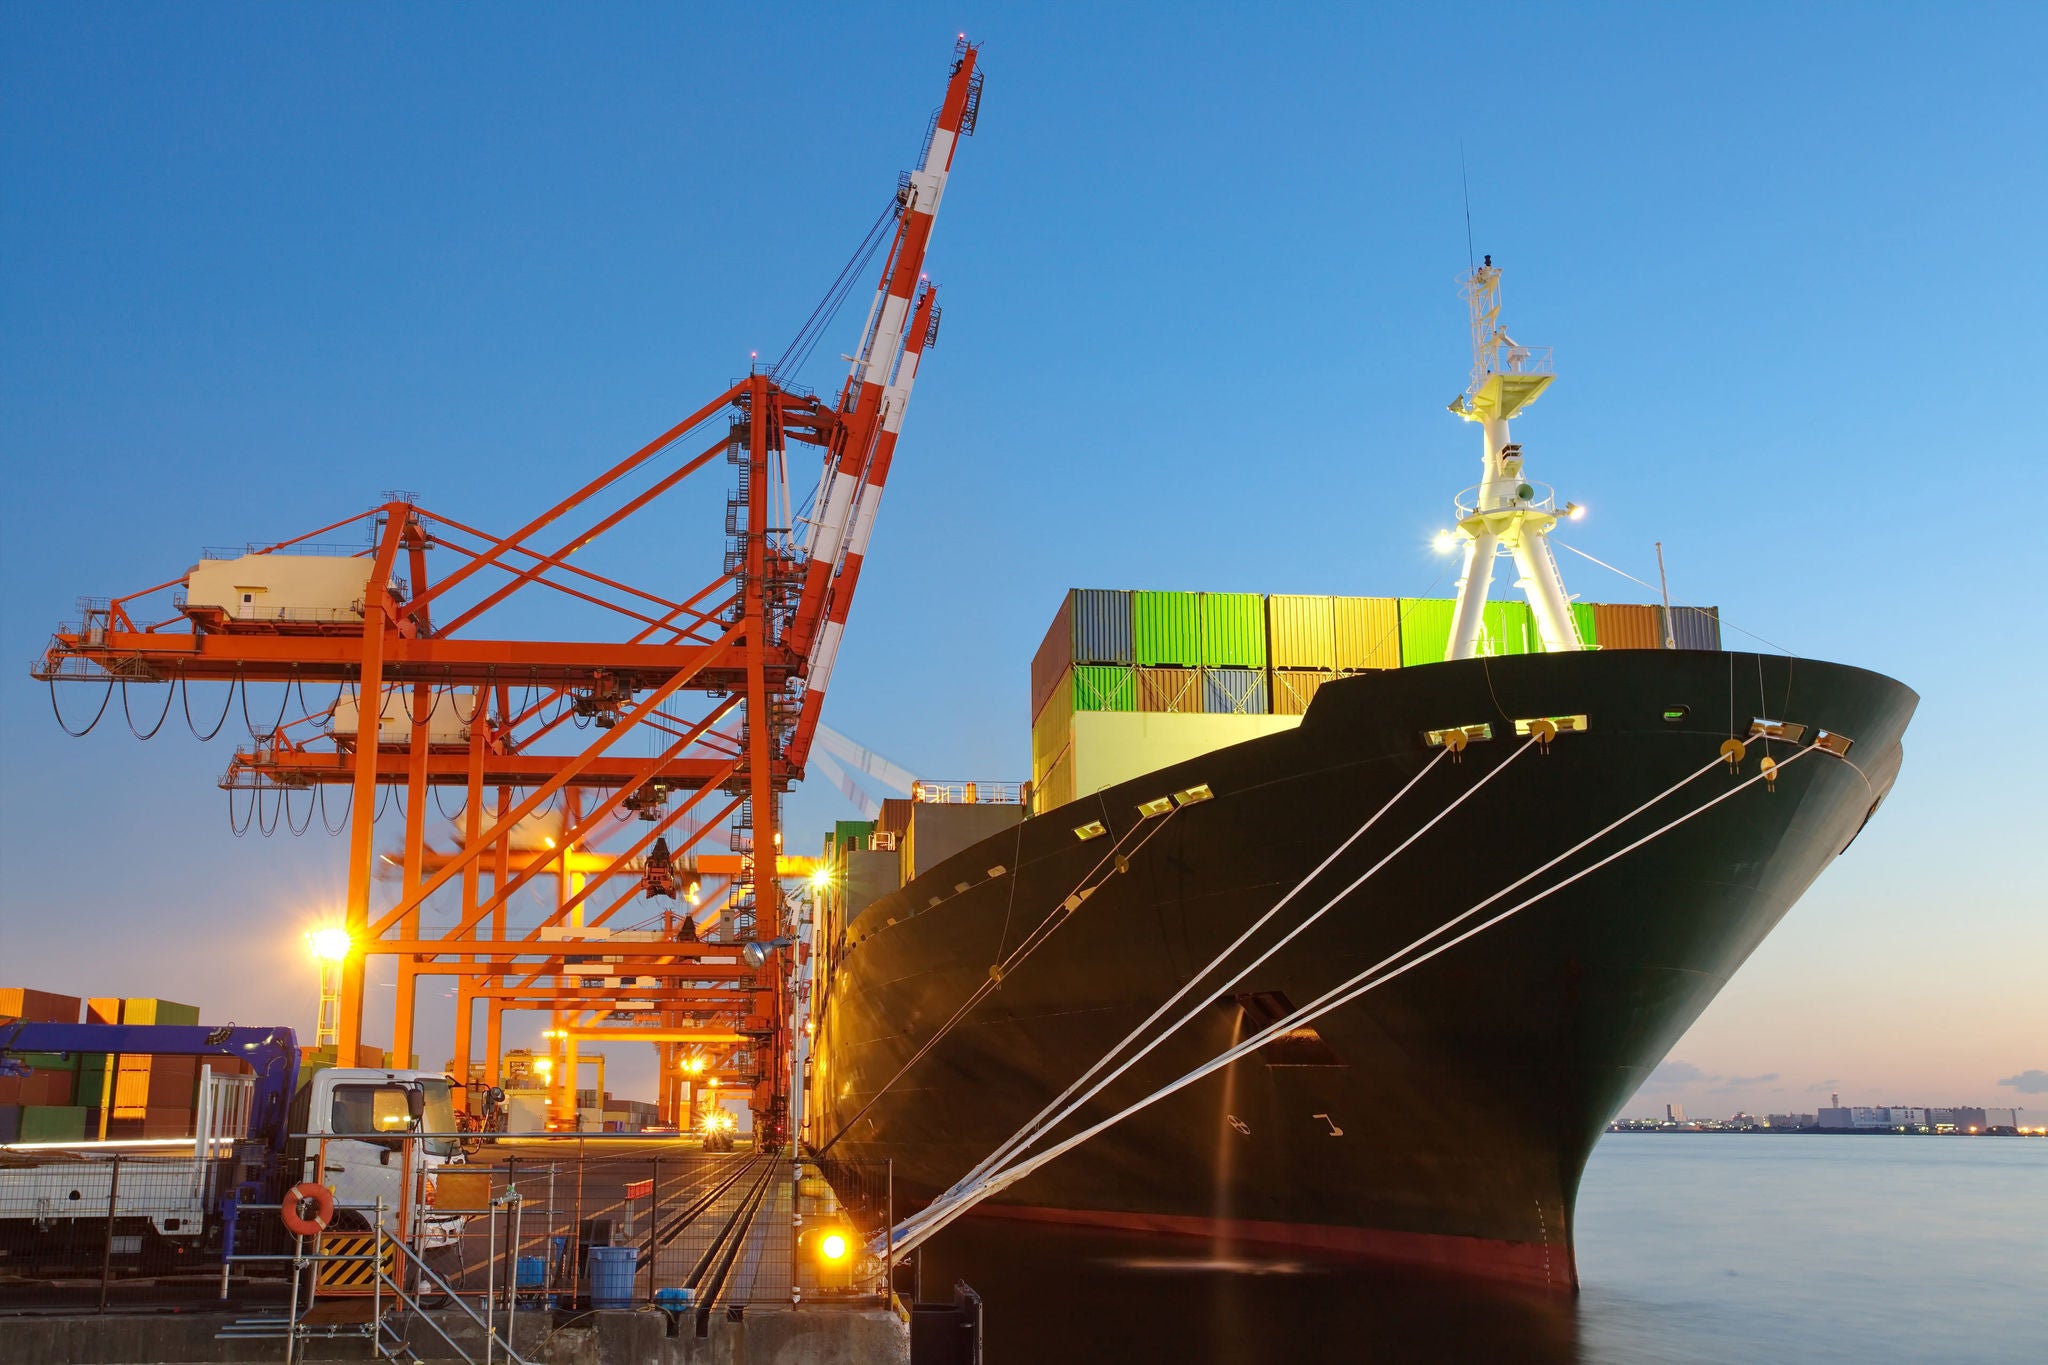 Container Cargo ship with crane